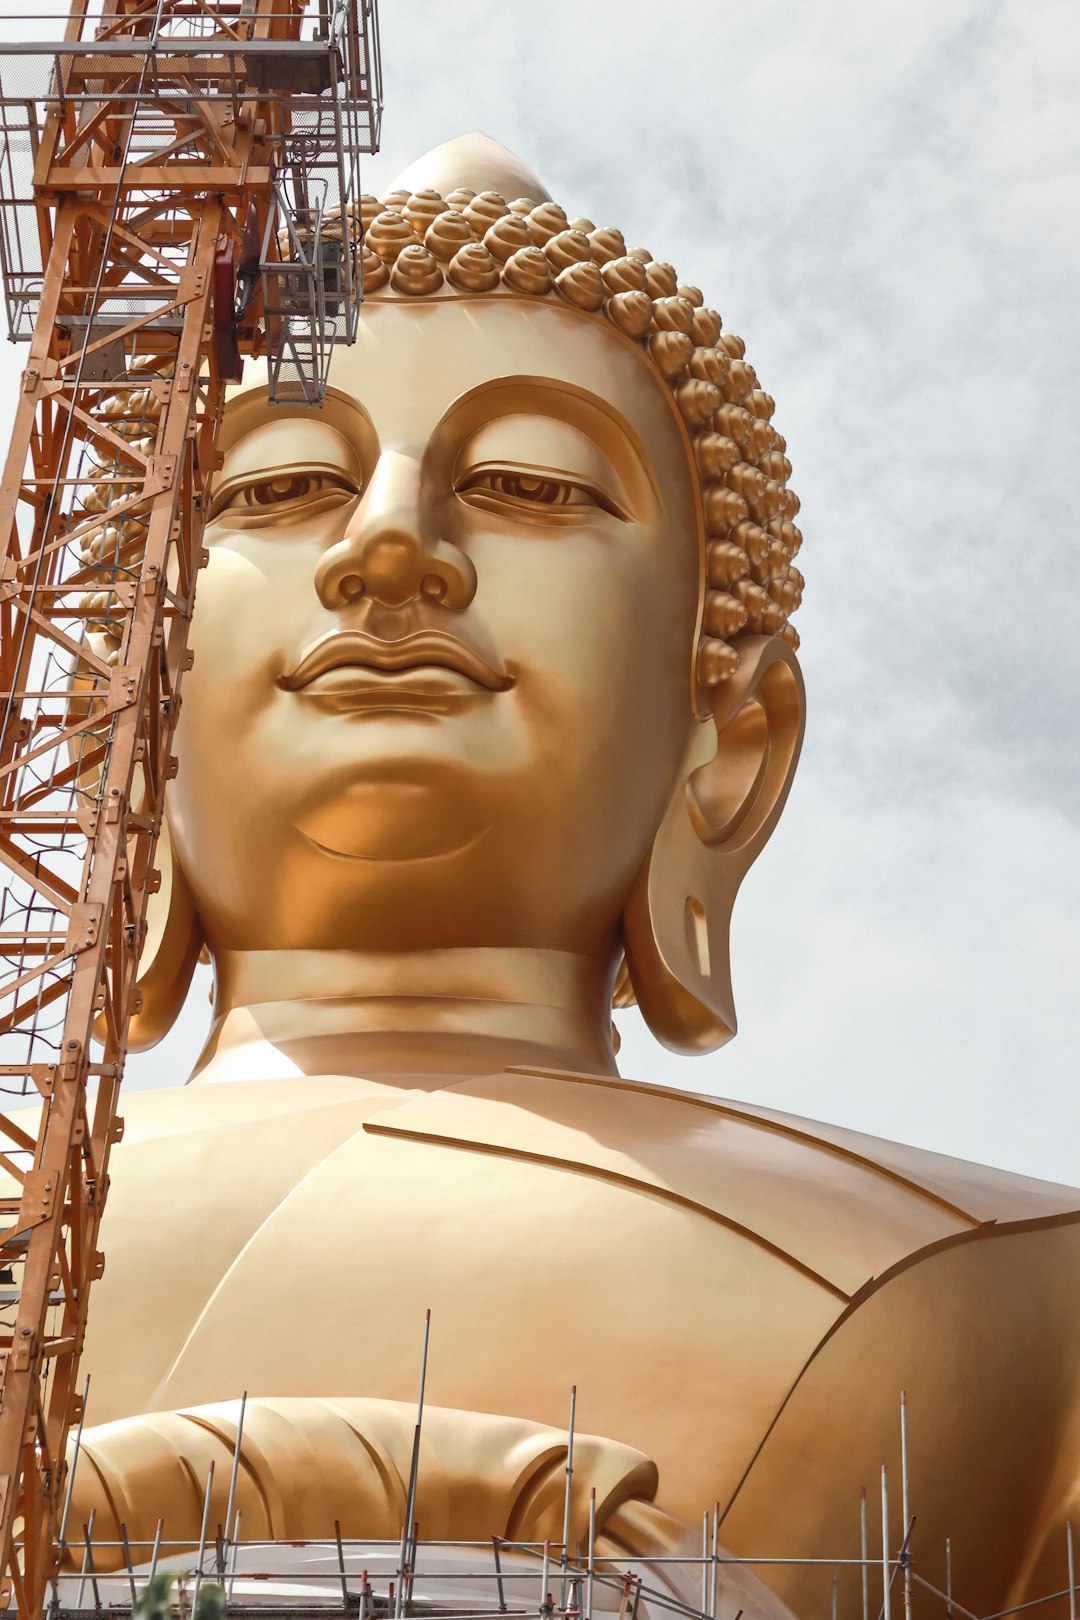 travelers stories about Landmark in Bangkok, Thailand